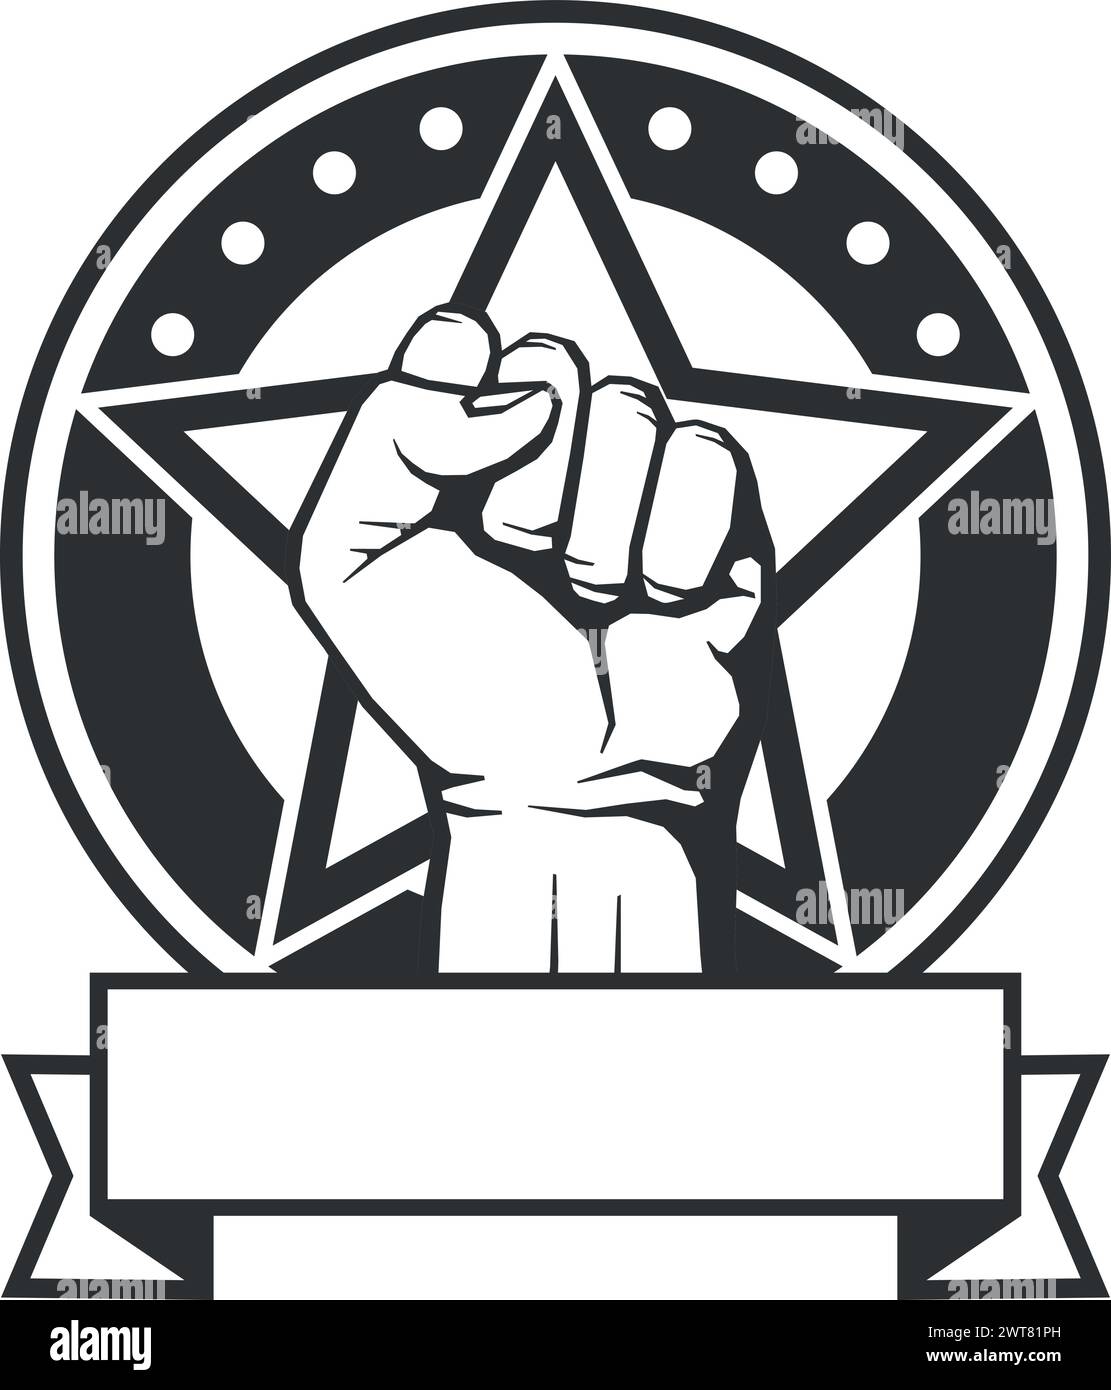 Strength symbol. Powerful human fist raising emblem Stock Vector